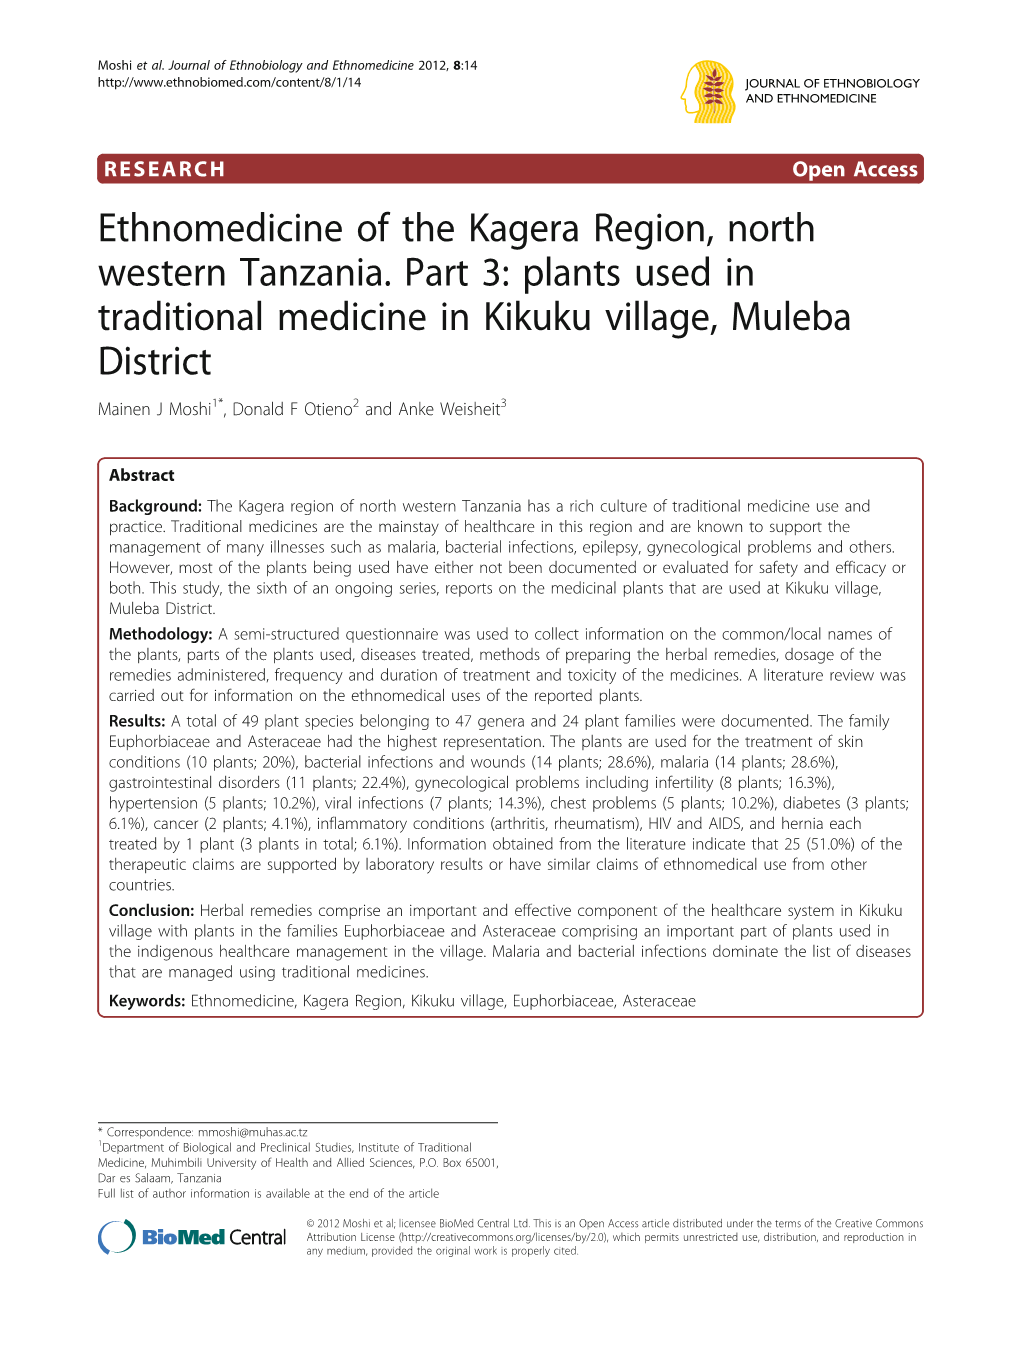 Ethnomedicine of the Kagera Region, North Western Tanzania. Part 3